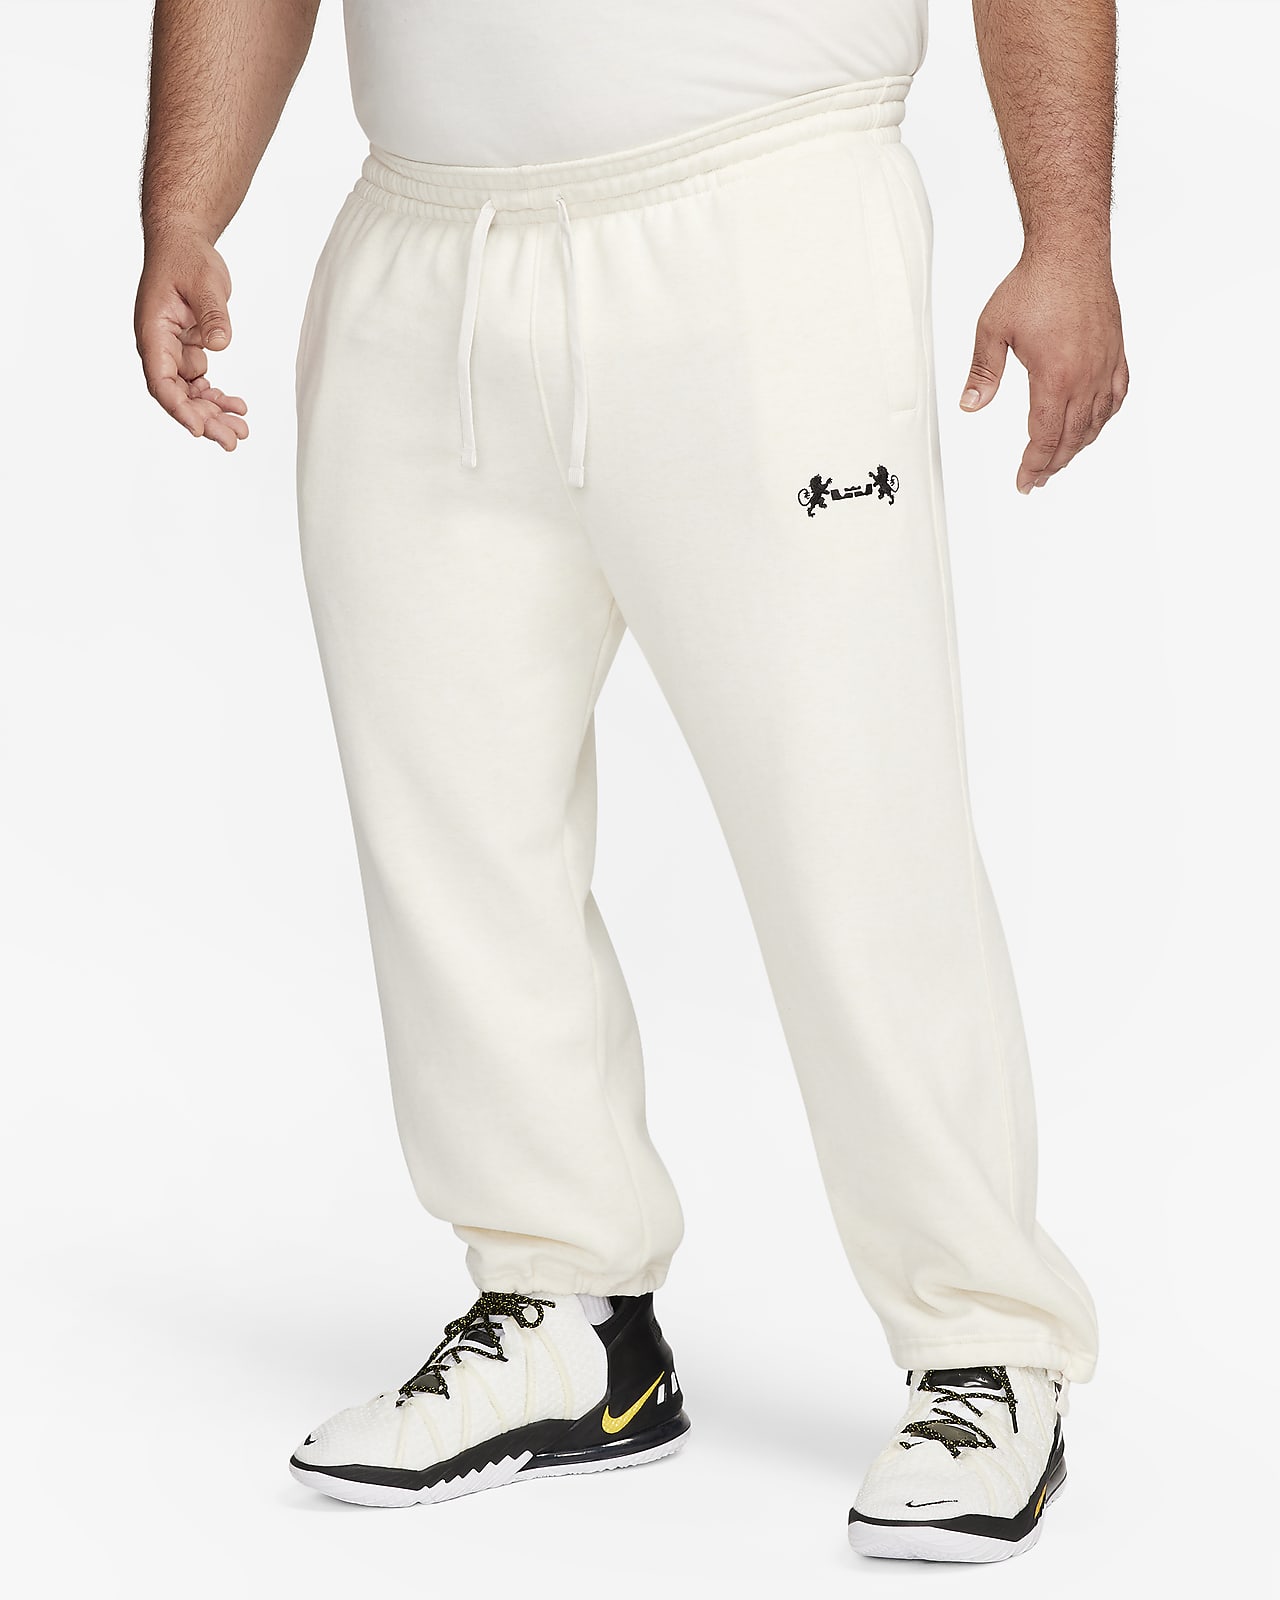 Nike Women's Sweatpants 623463, Athletic Dept. Drawstring Waist Polycotton  Pants | eBay